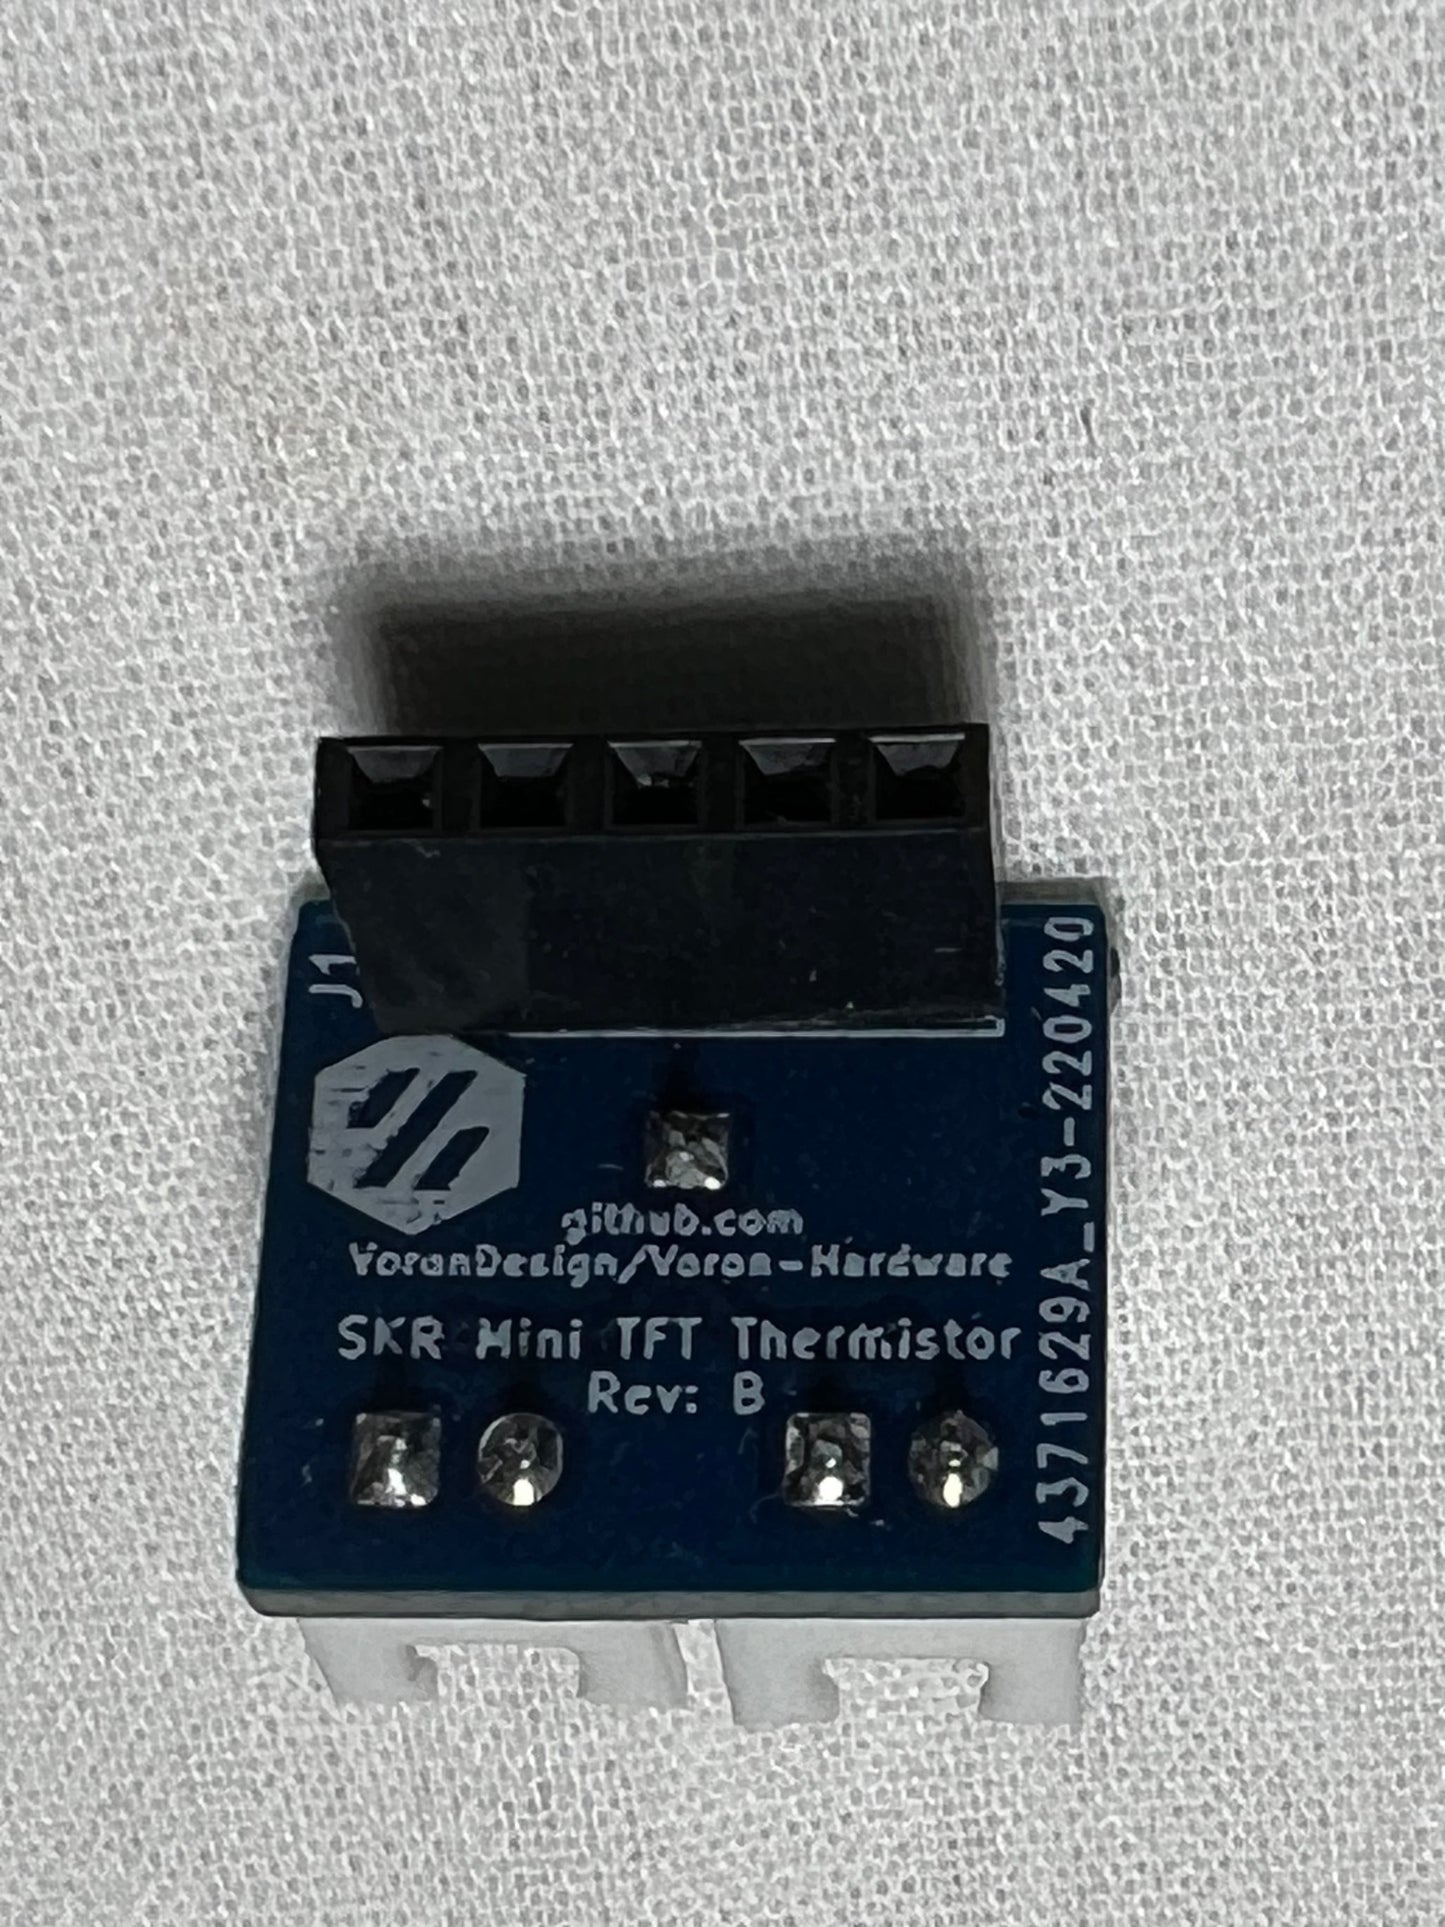 SKR Mini E3 Thermistor Expander by T. Abraham